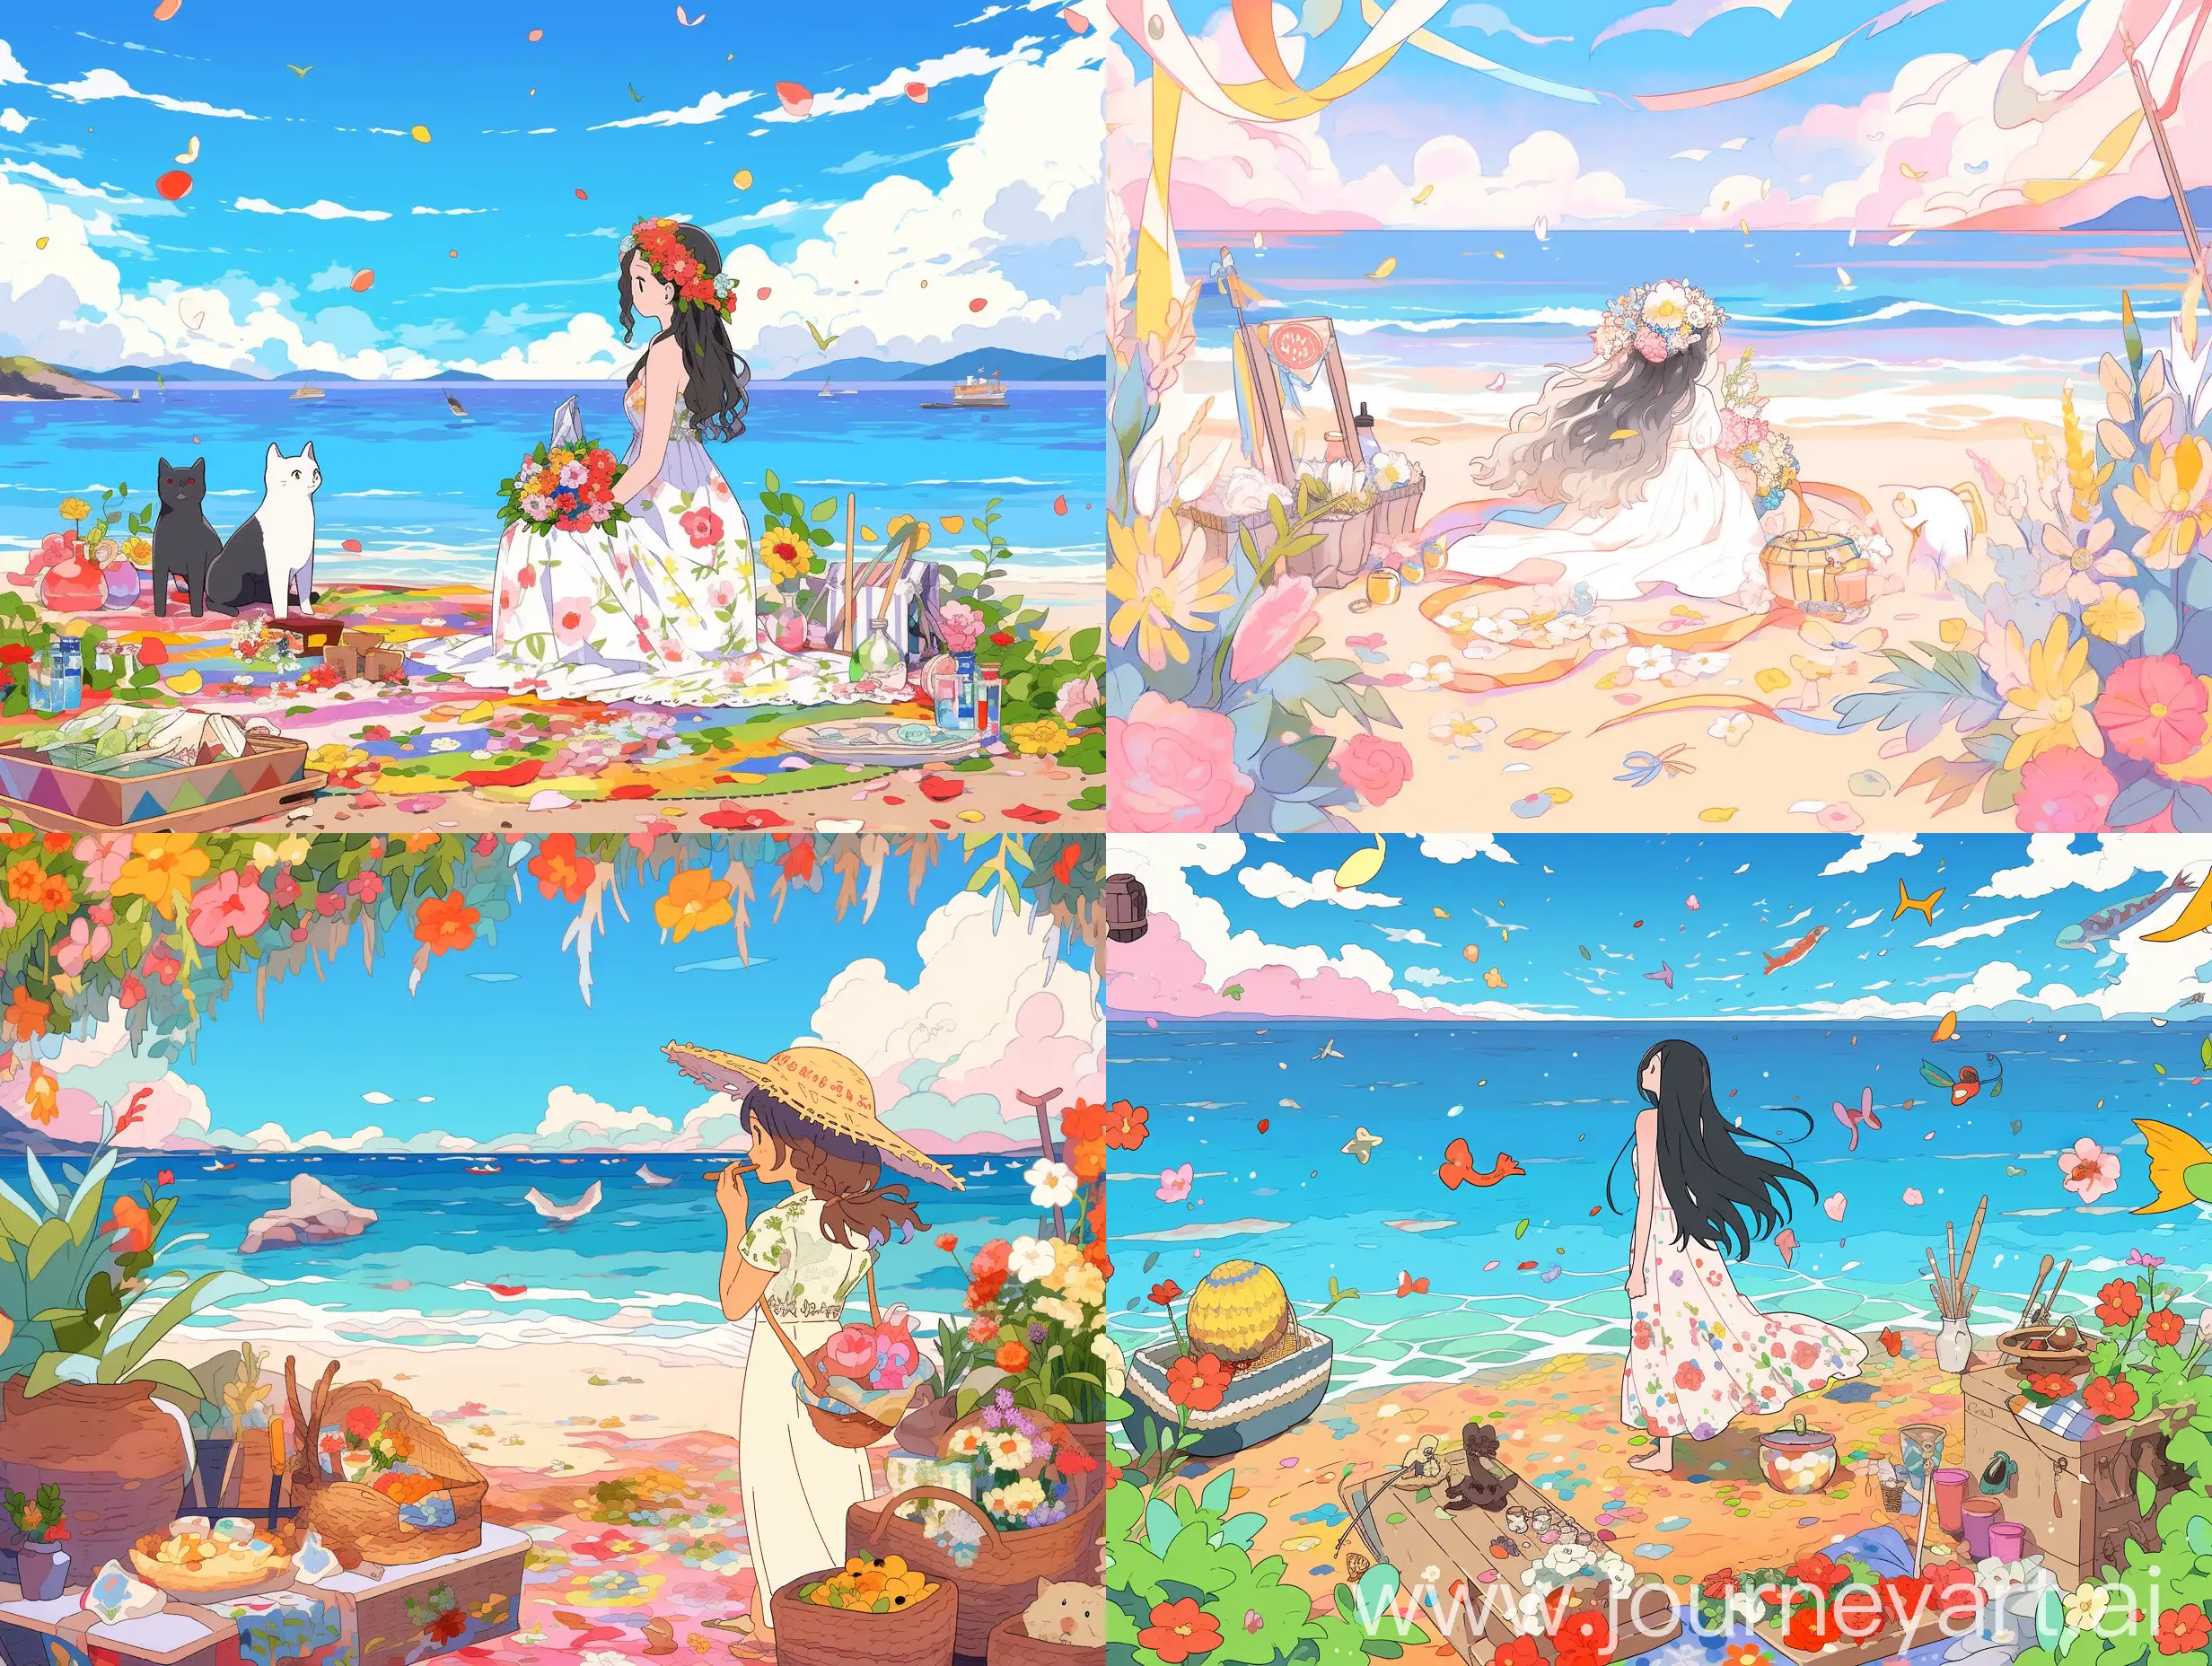 Serene-Beach-Scene-with-Lady-Admiring-Sky-and-Boat-Miyazaki-Style